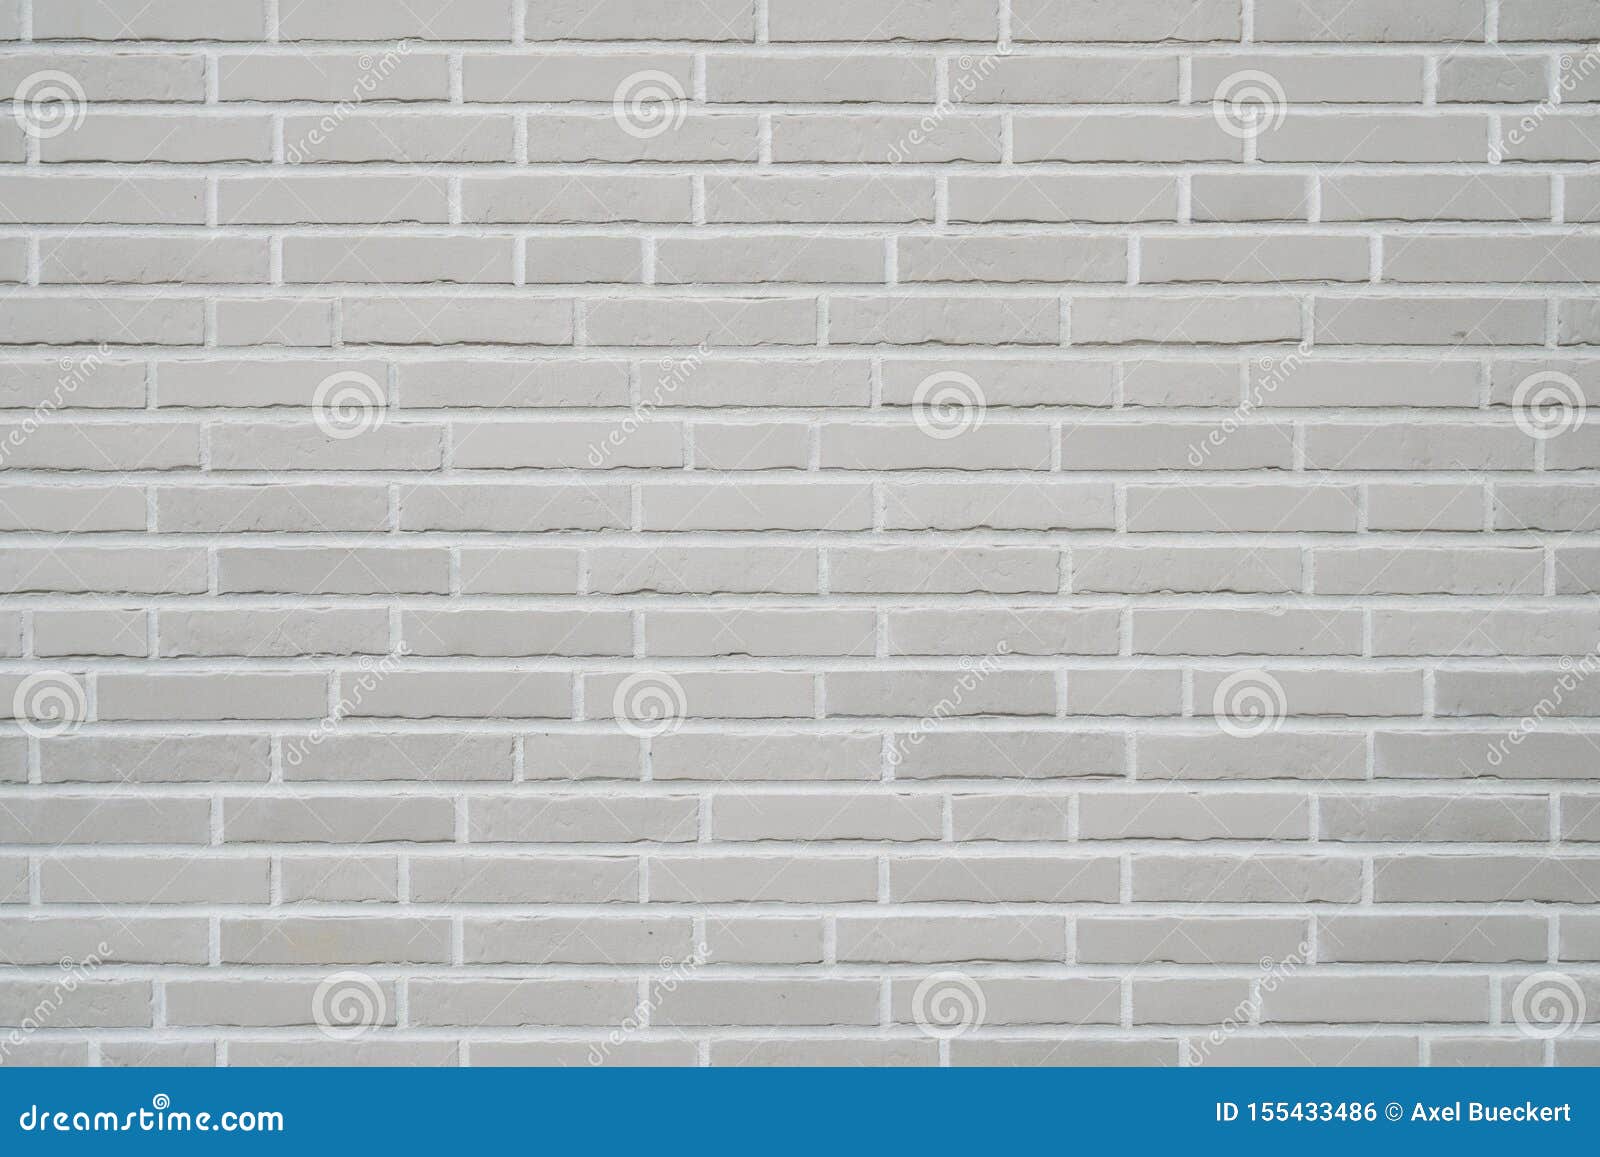 gray clinker brick wall background